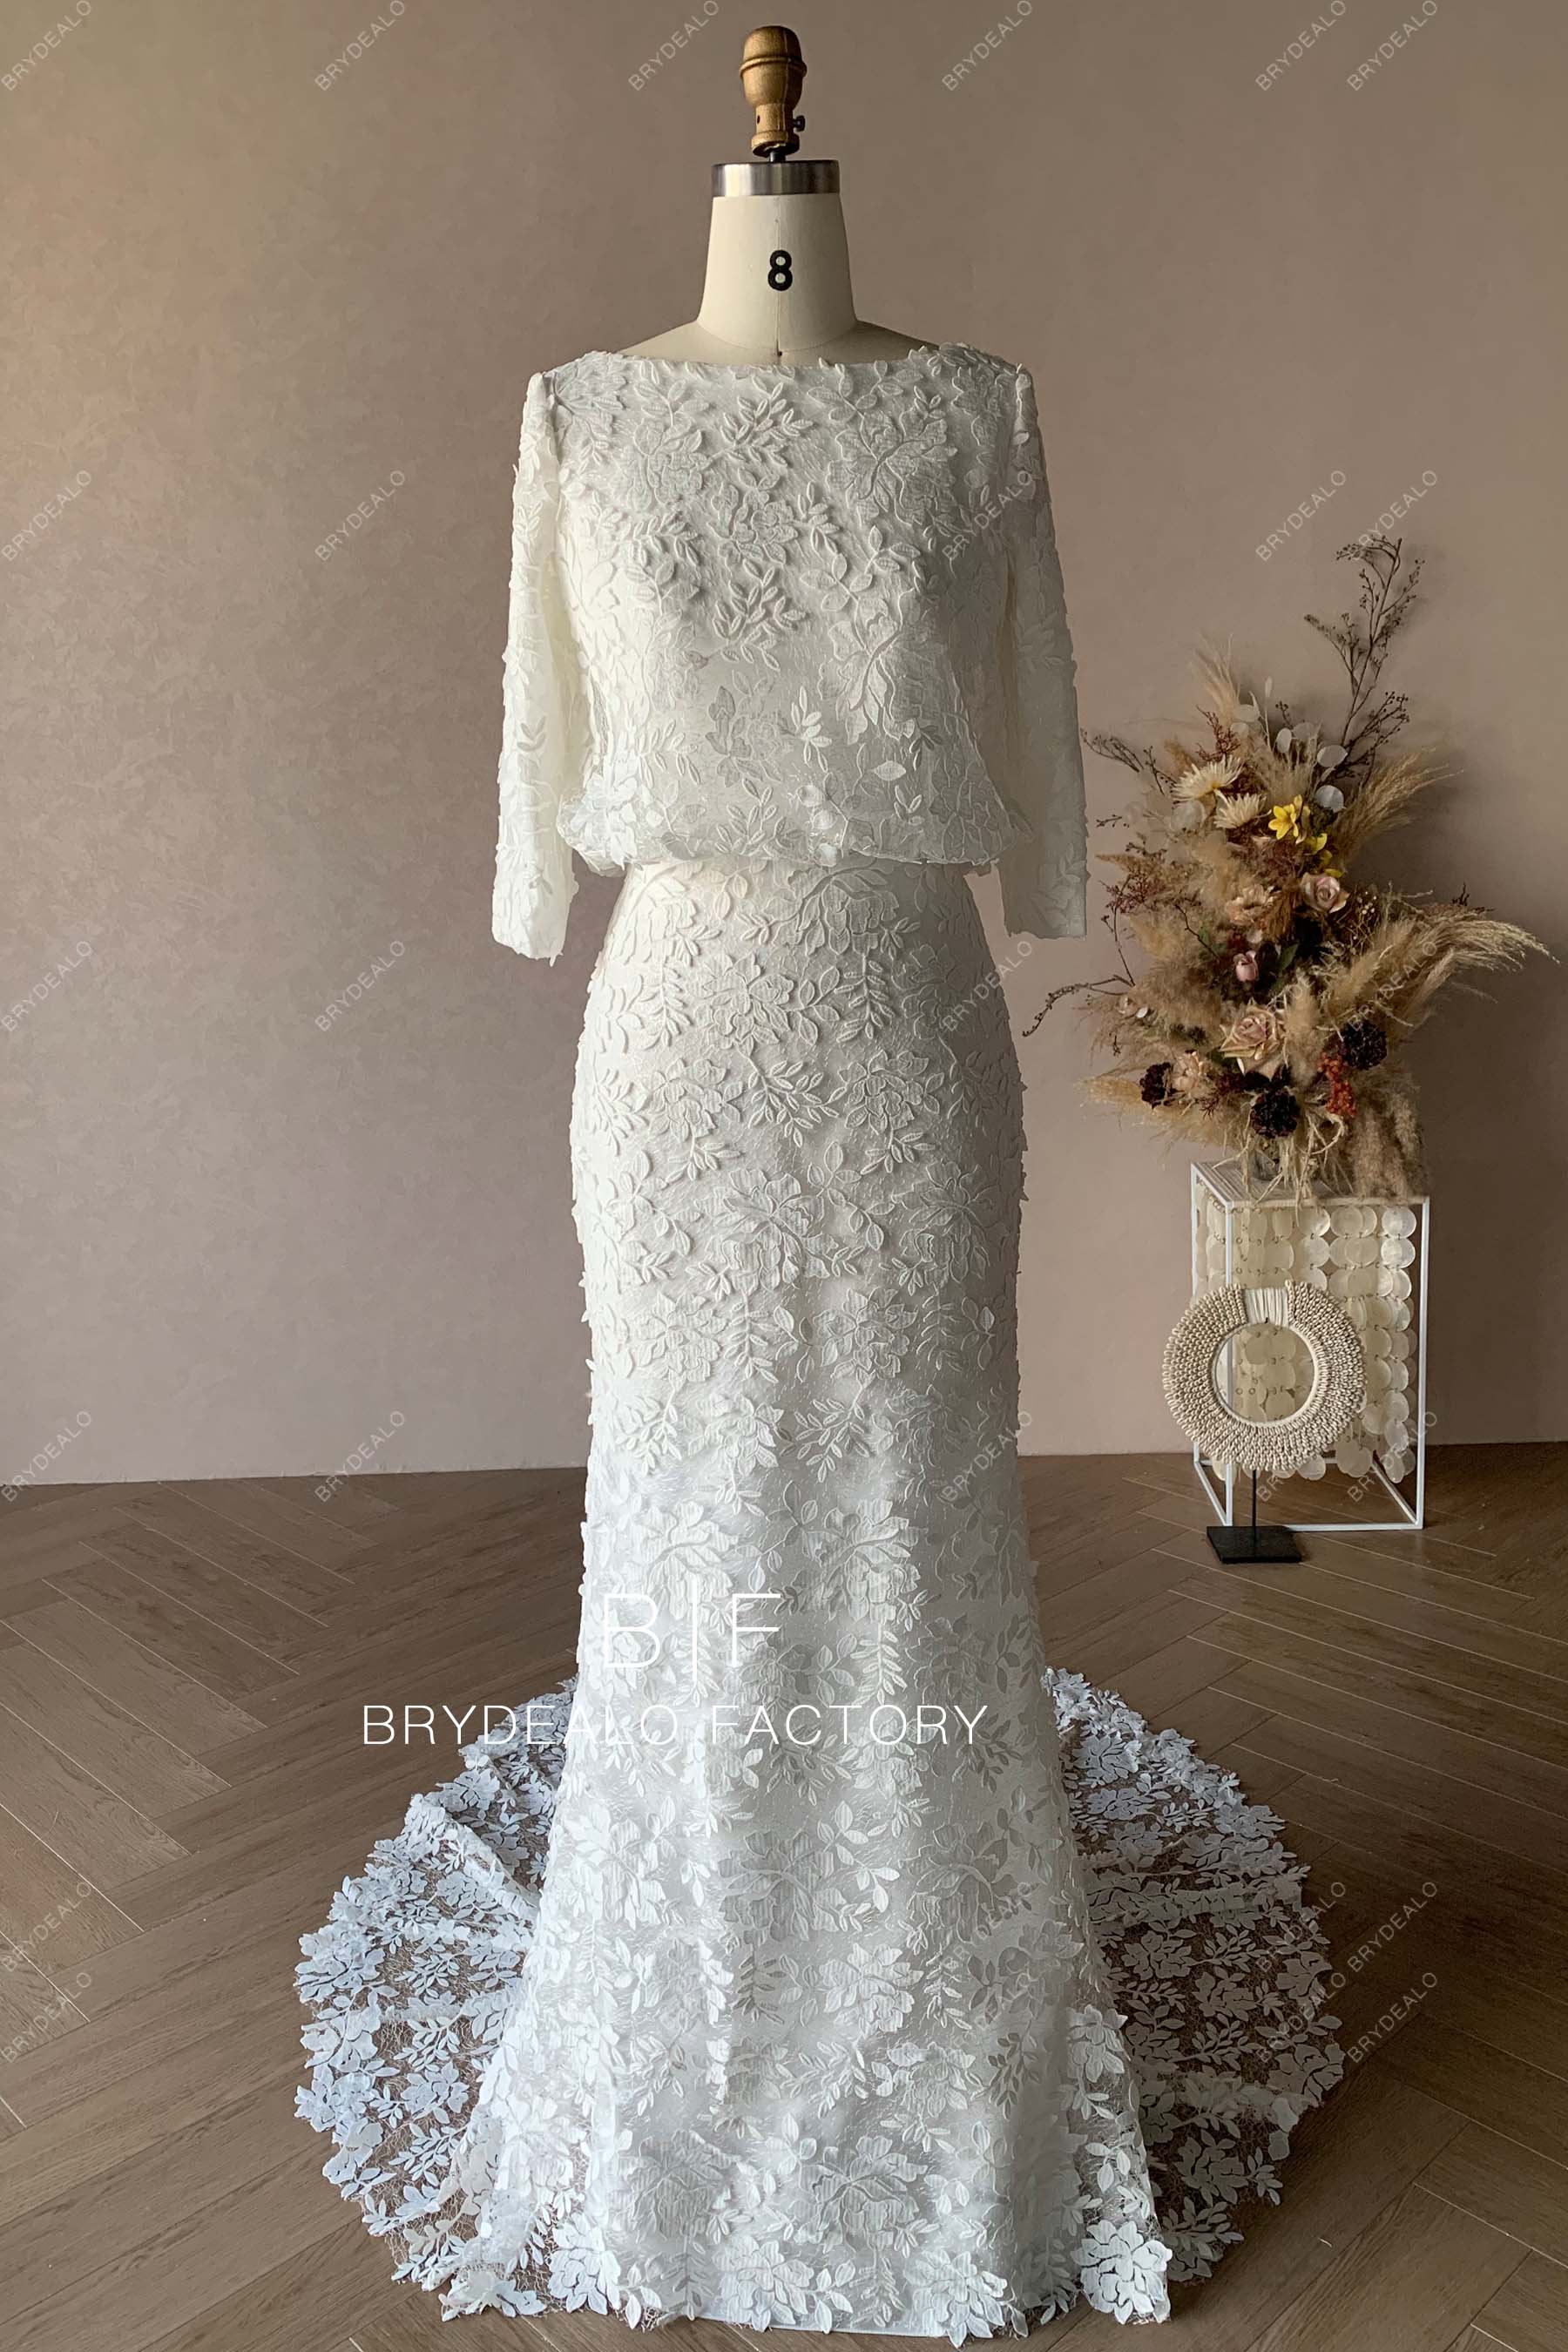 Private Label Boho Lace Loose Bodice Mermaid Wedding Dress BR20221498